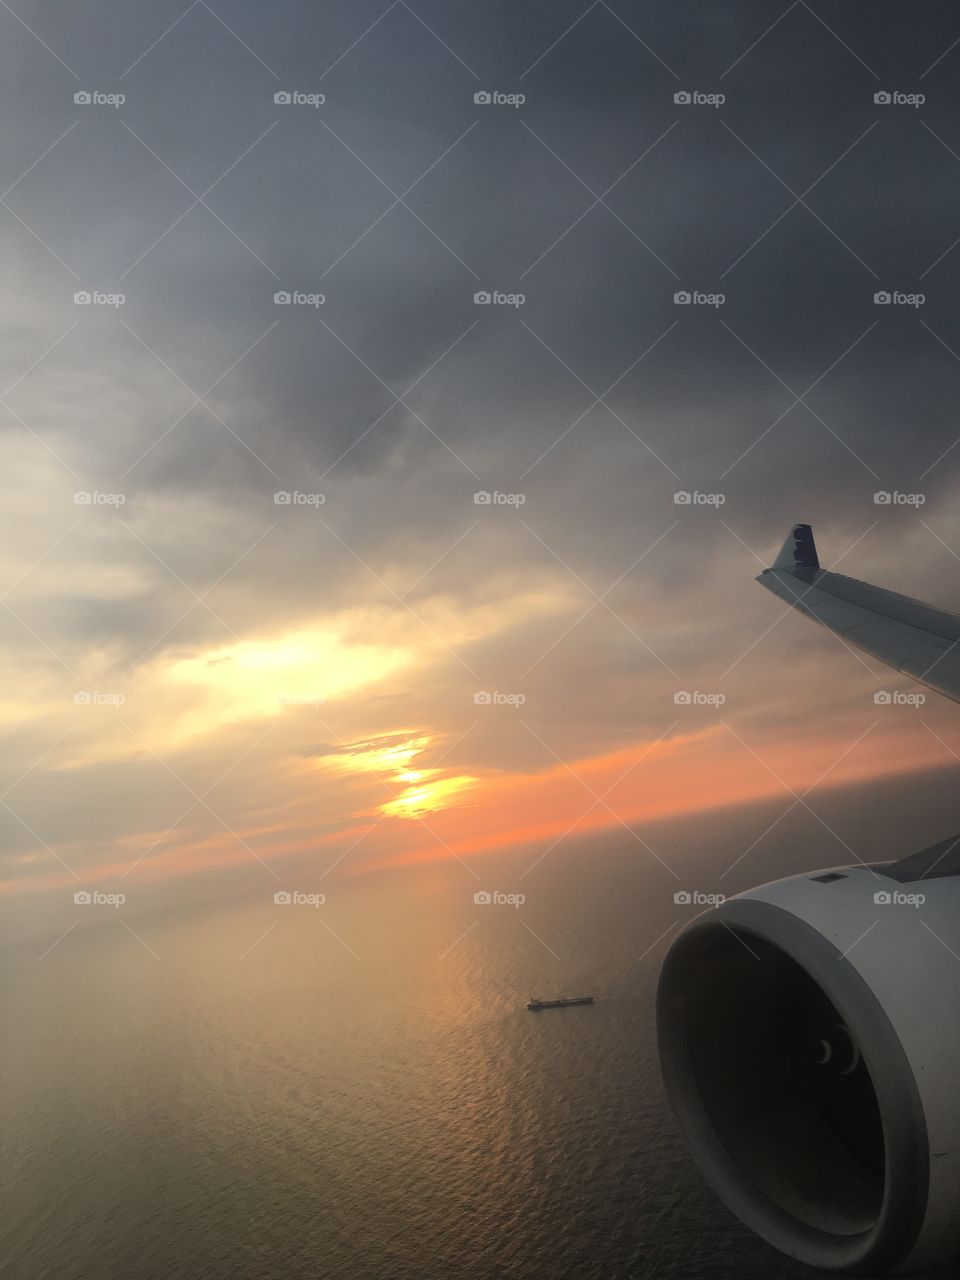 Sunrise over the ocean. Plane passes a boat 